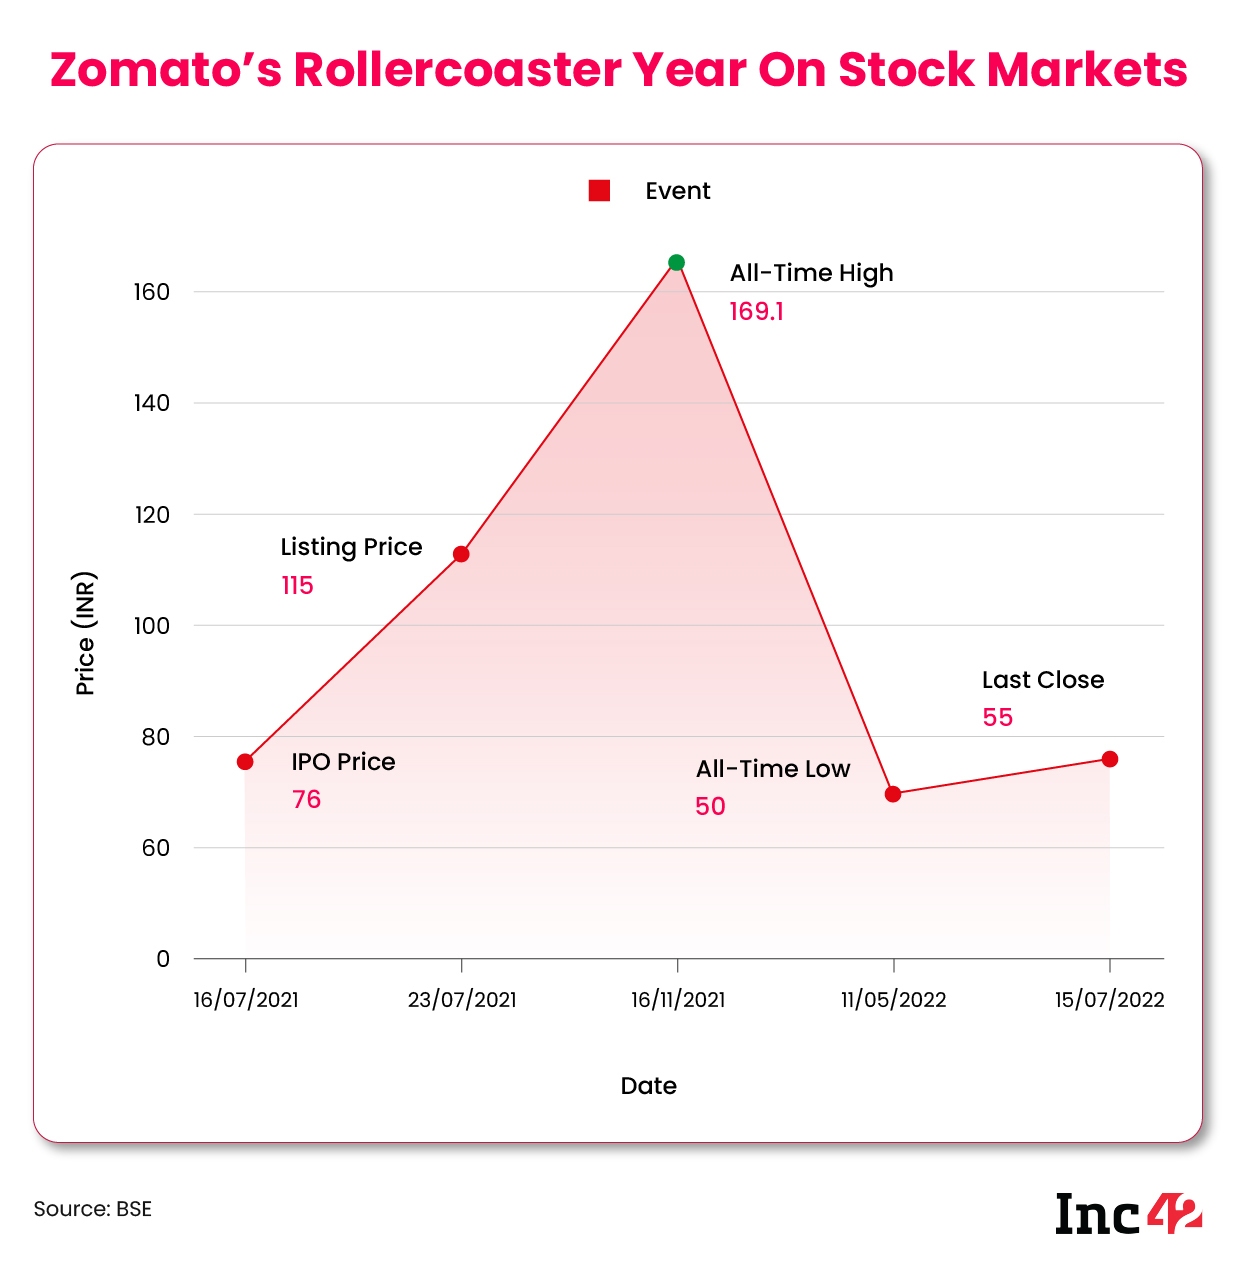 Zomato's rollercoaster year on stock markets